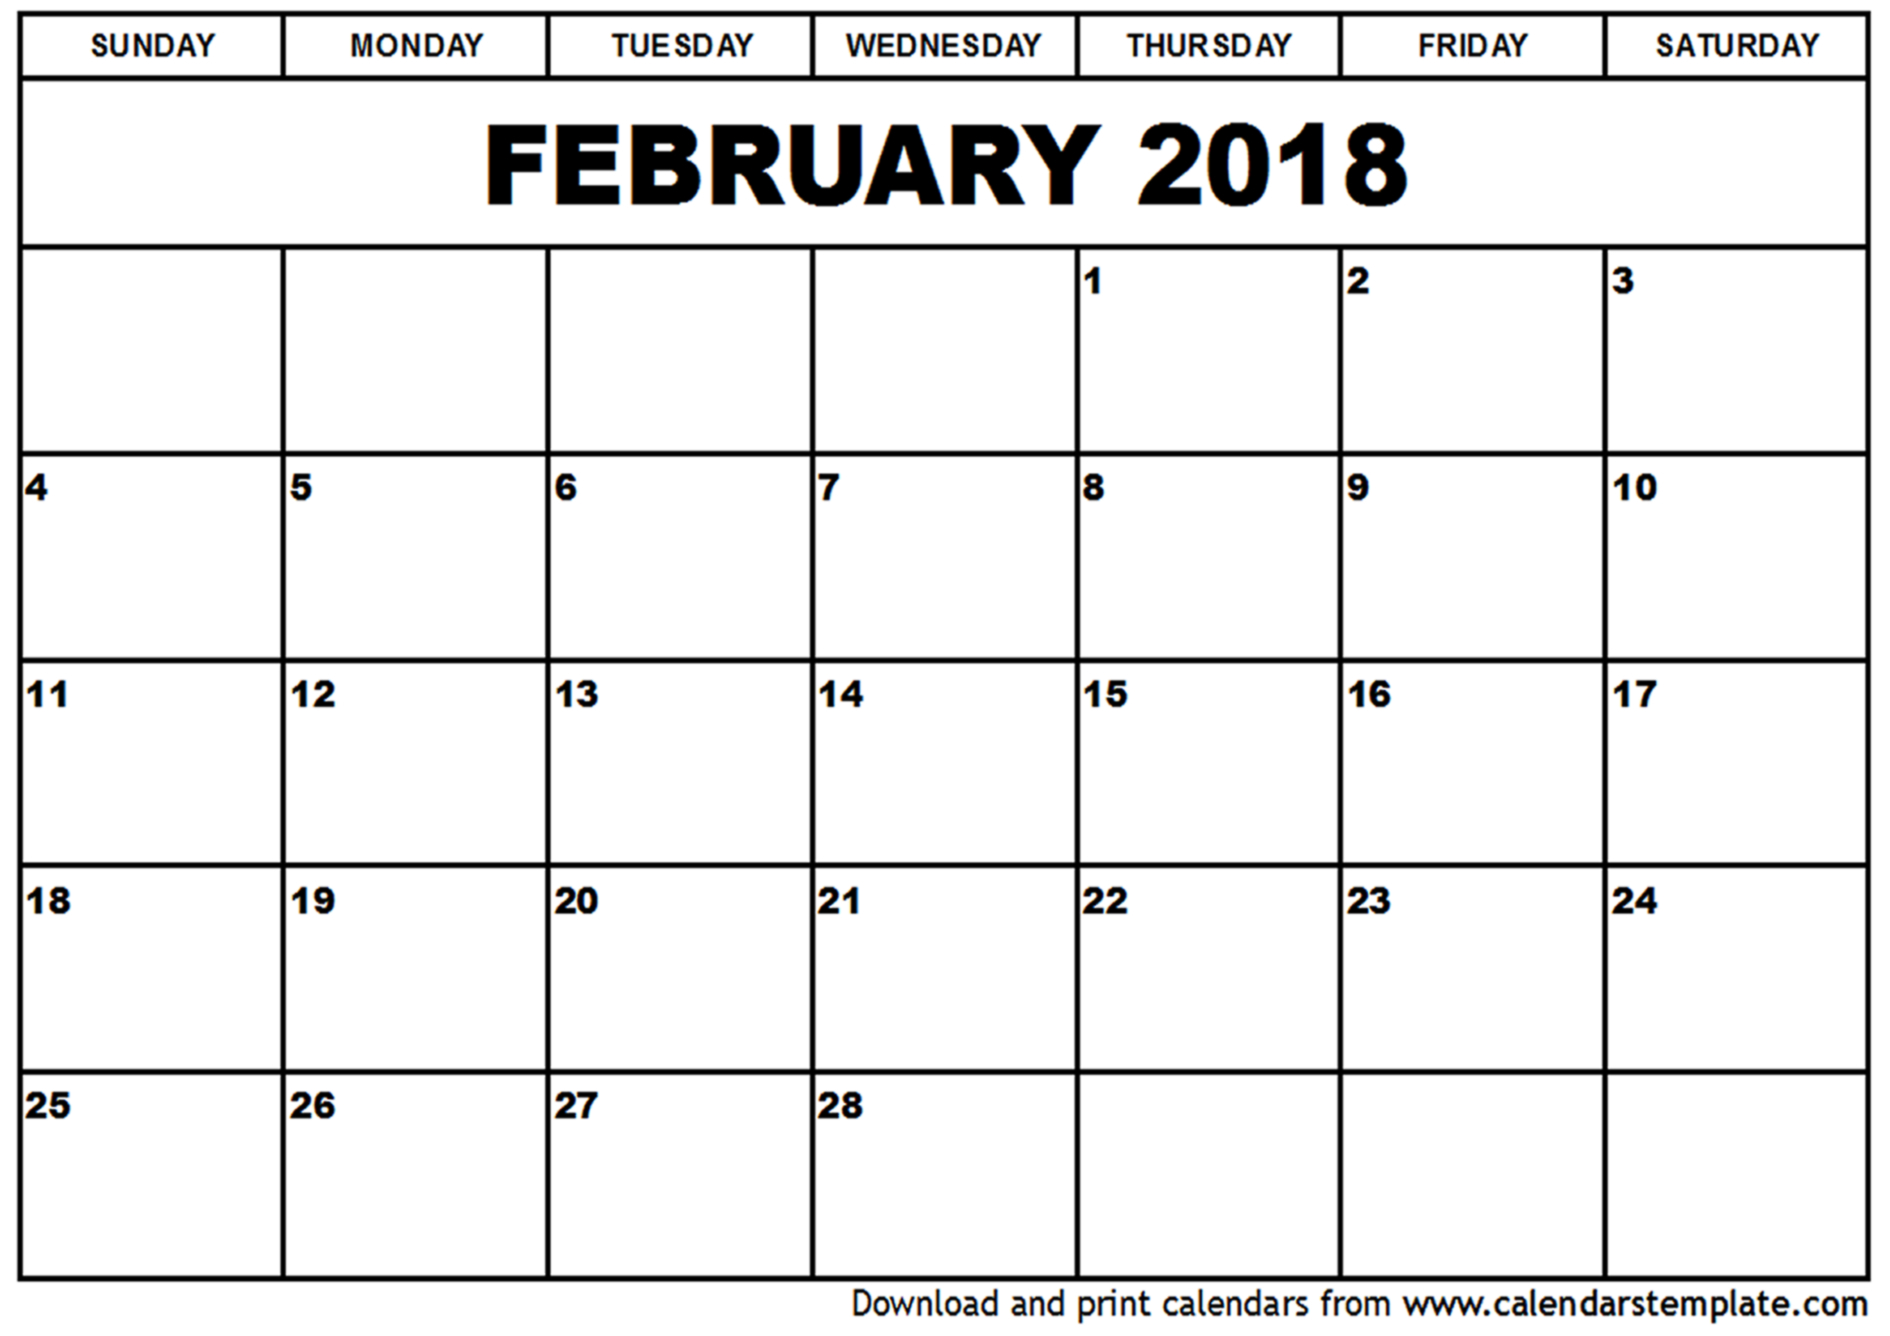 Download February 2018 calendar printable free